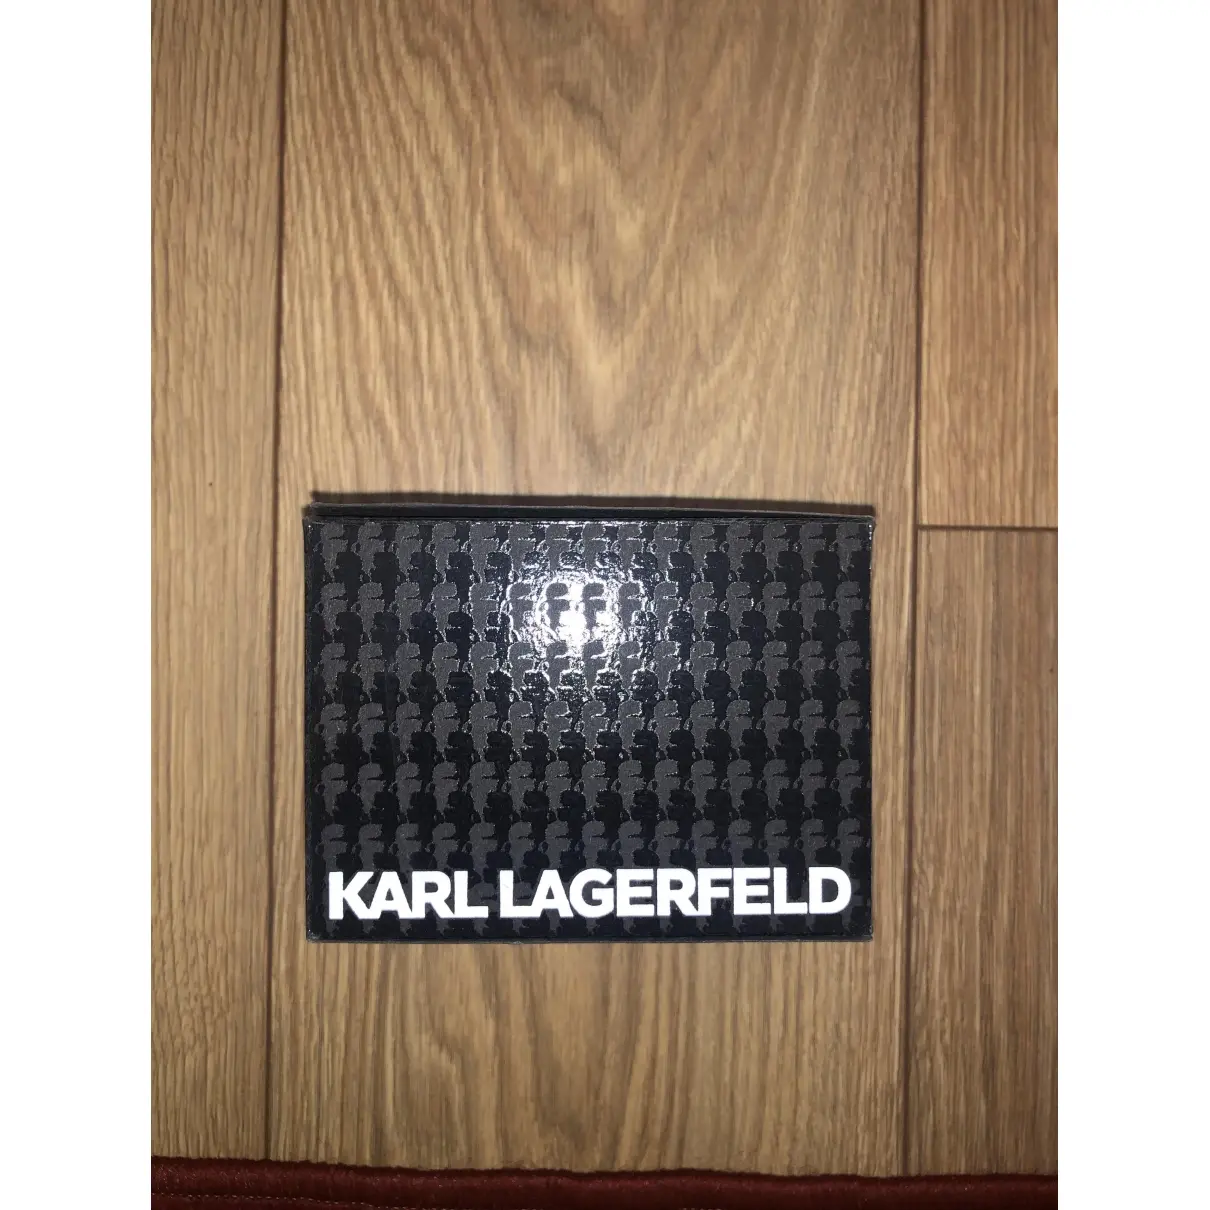 Buy Karl Lagerfeld Ceramic watch online